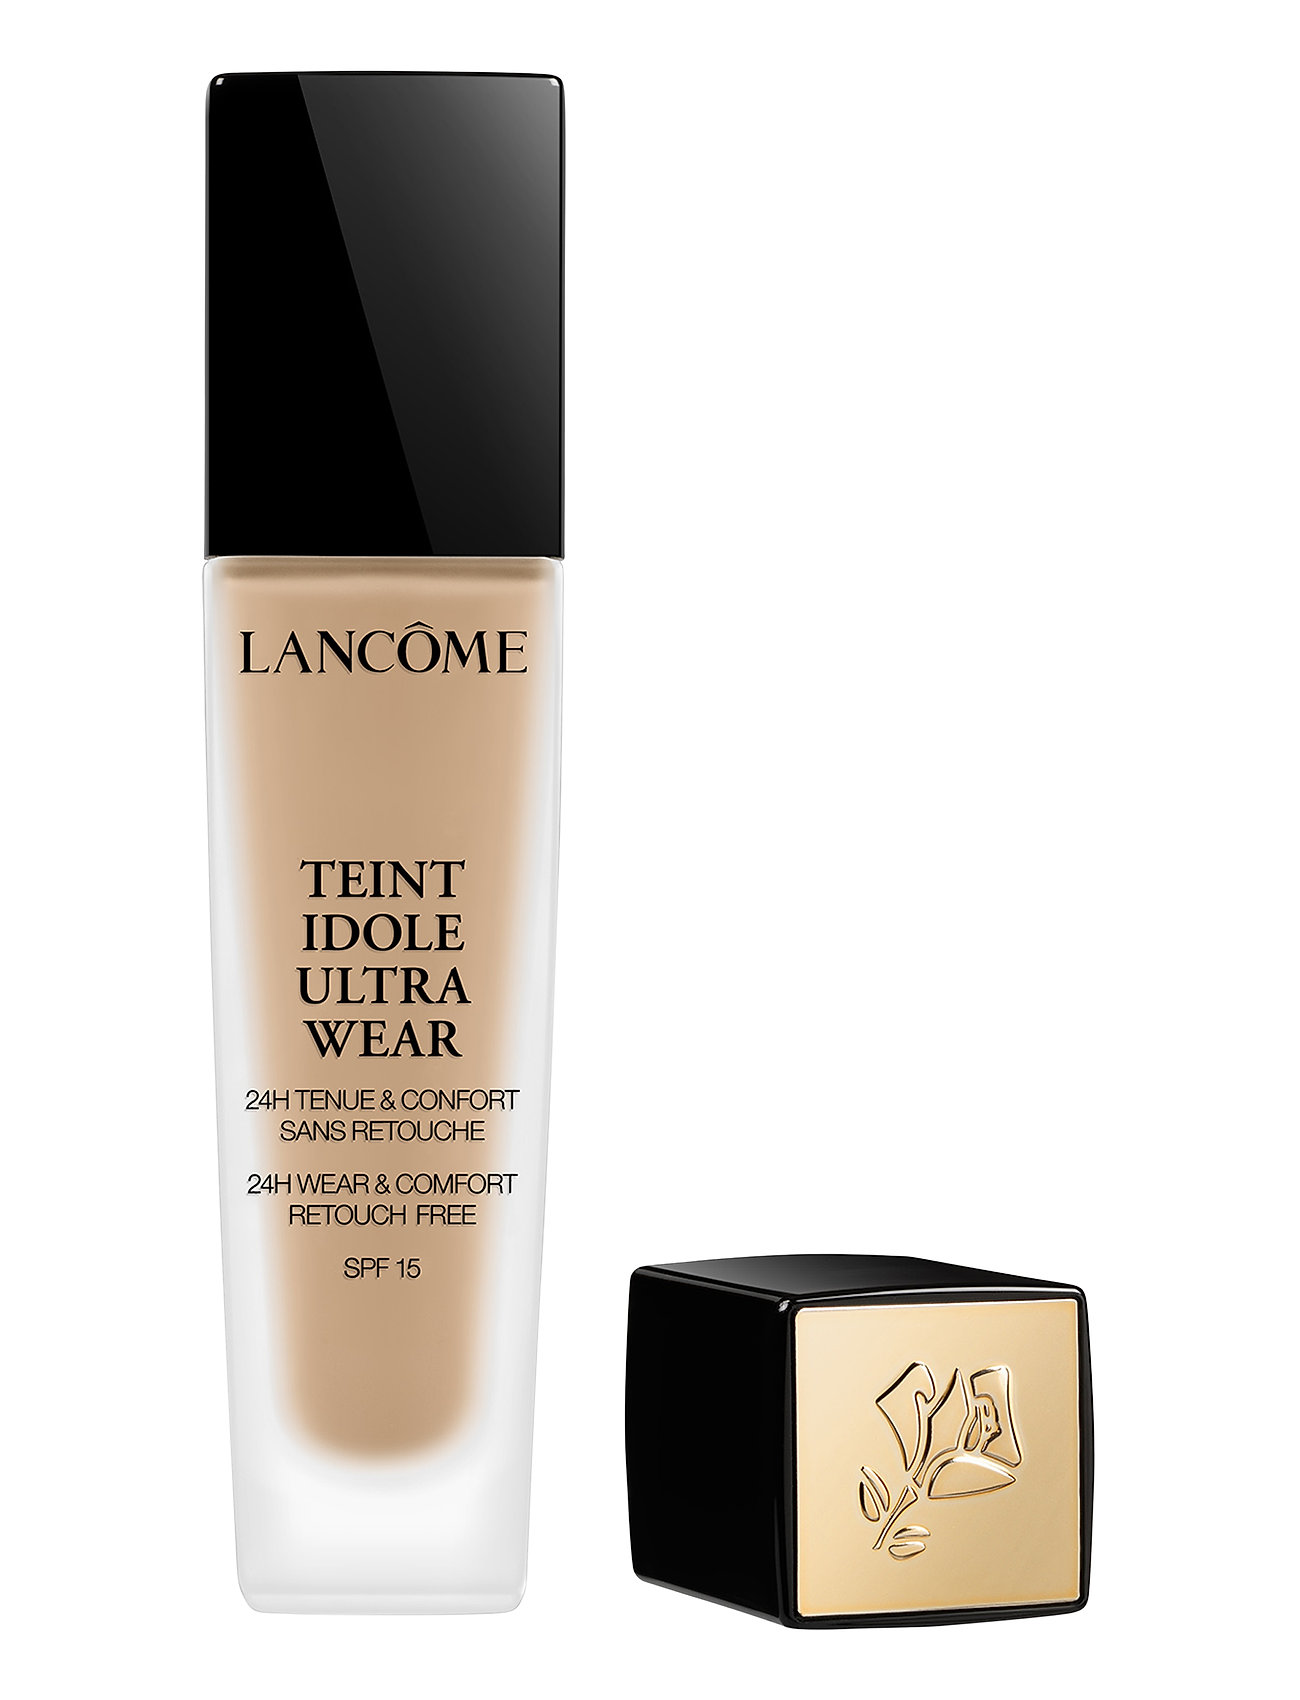 Lancôme Teint Idole Ultra Wear Foundation Makeup